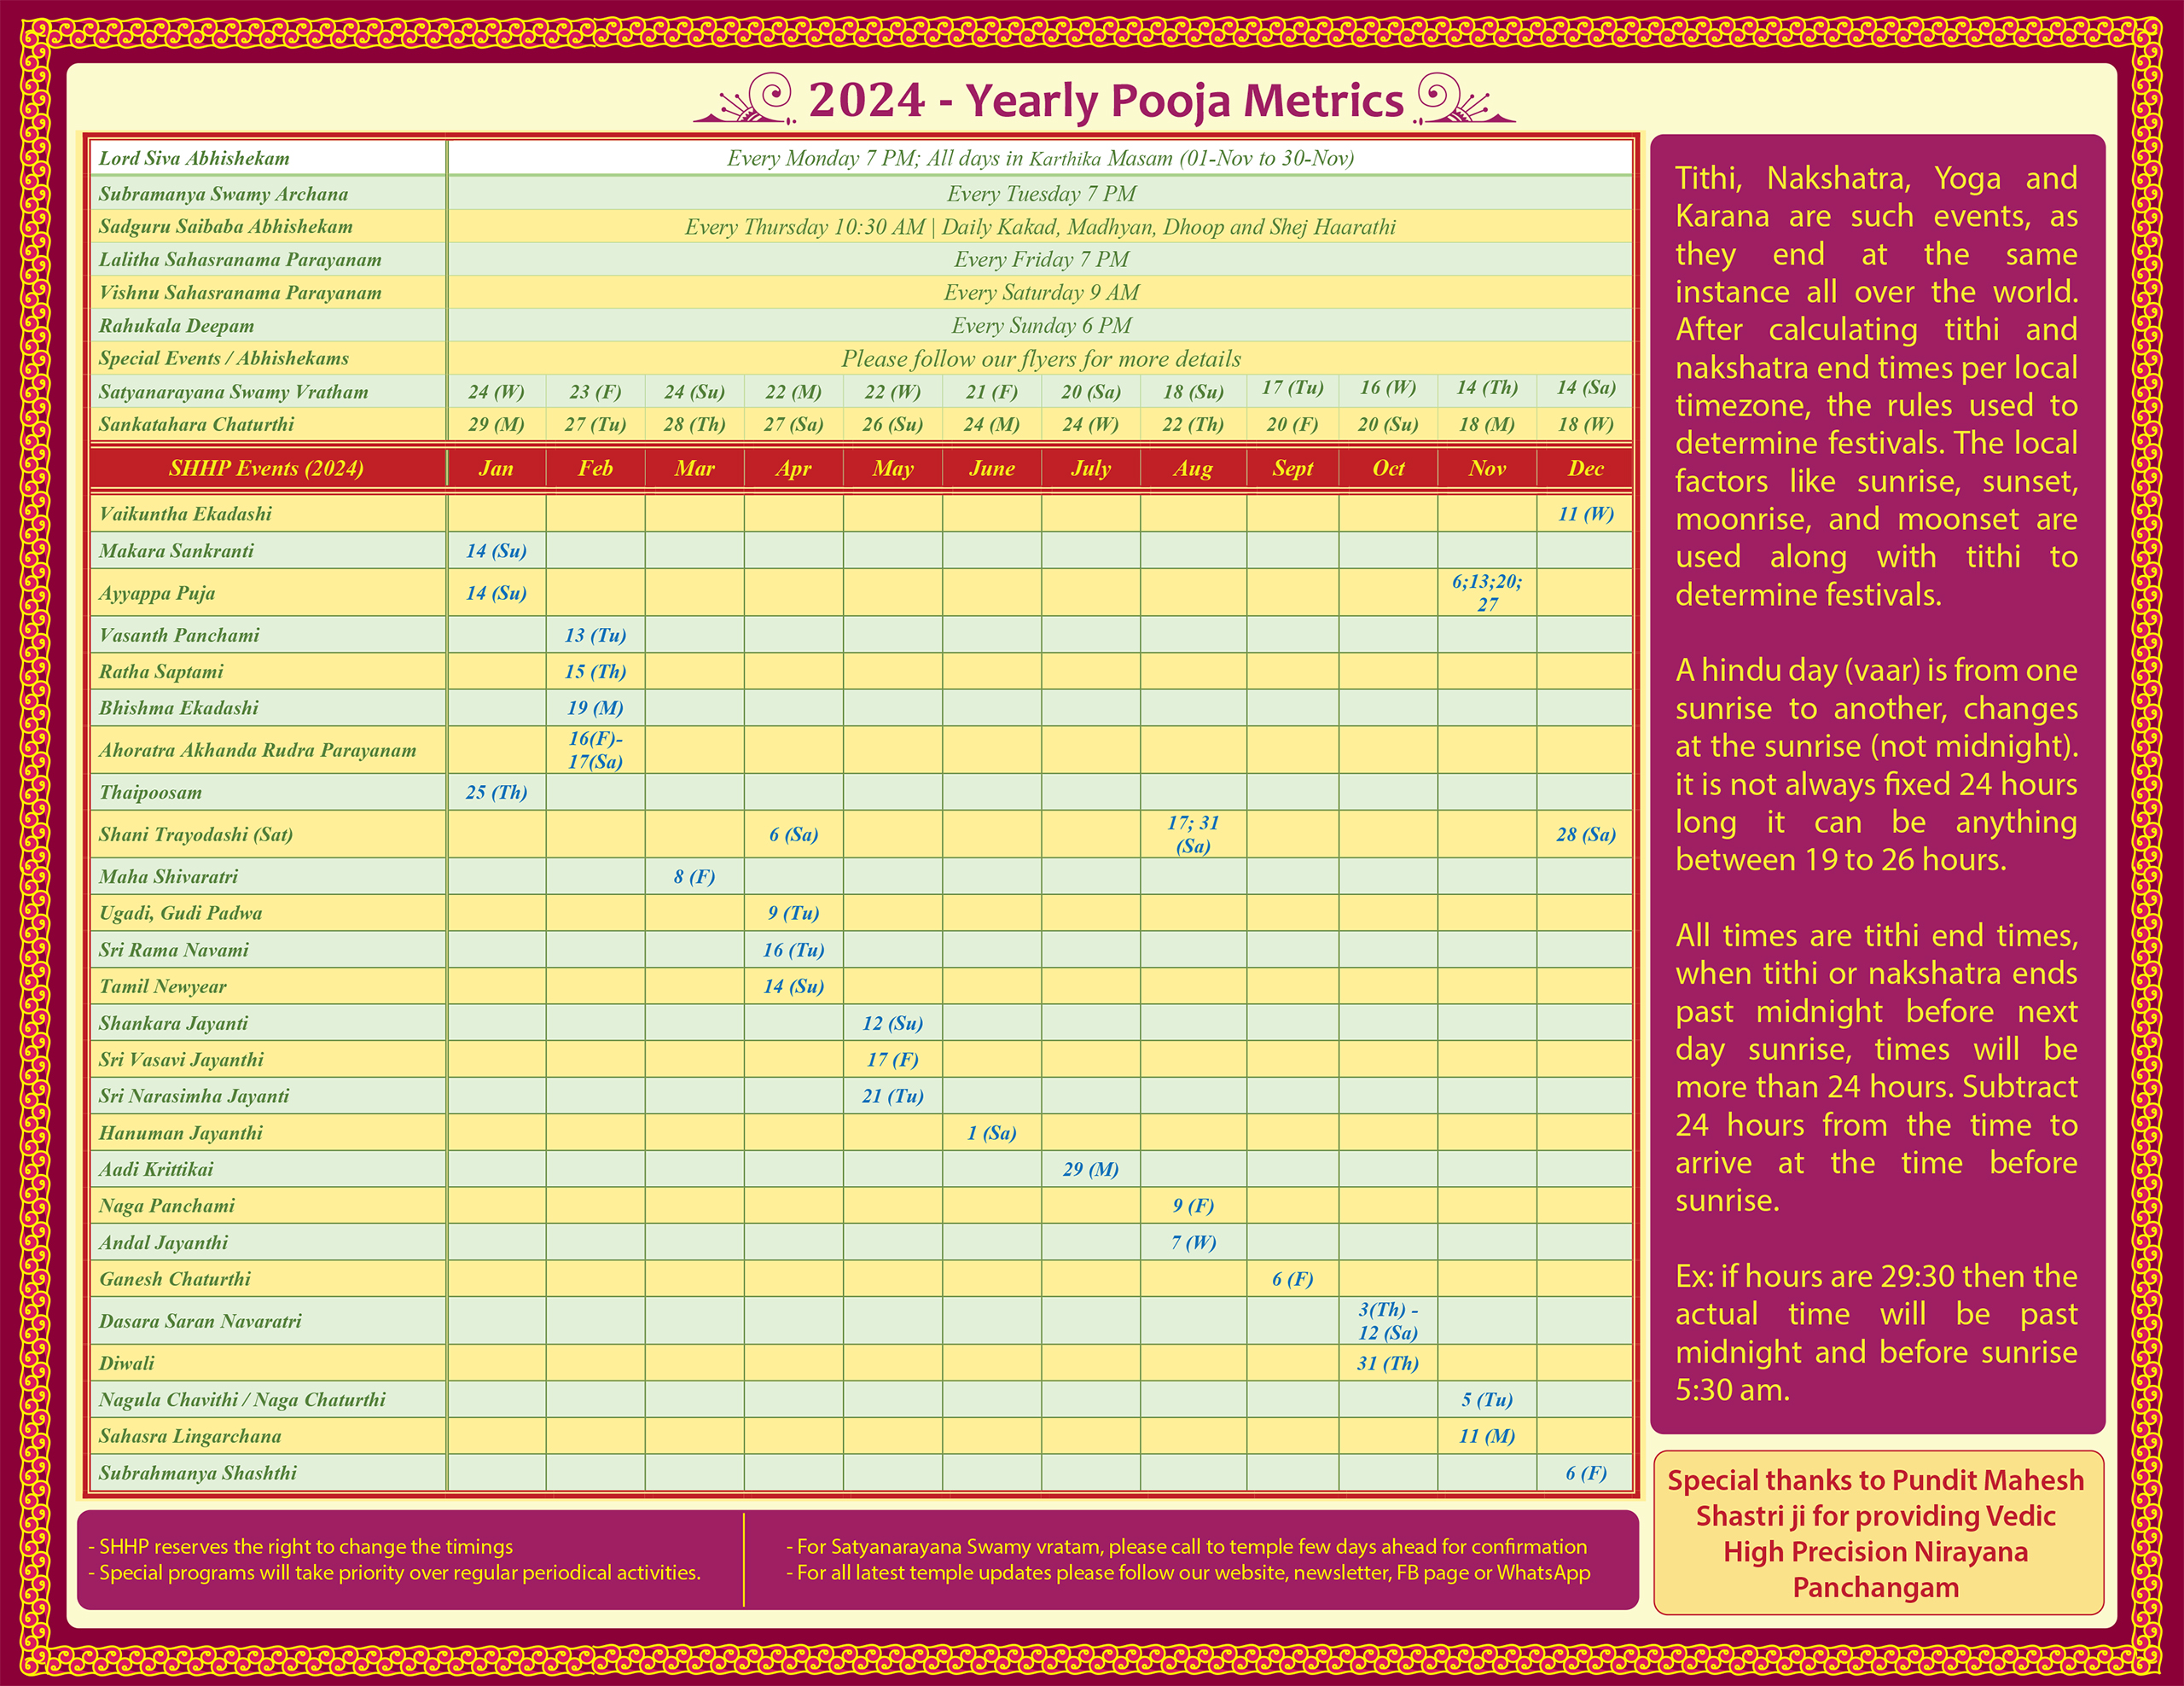 Sri HariHara Peetham's yearly pooja metrics